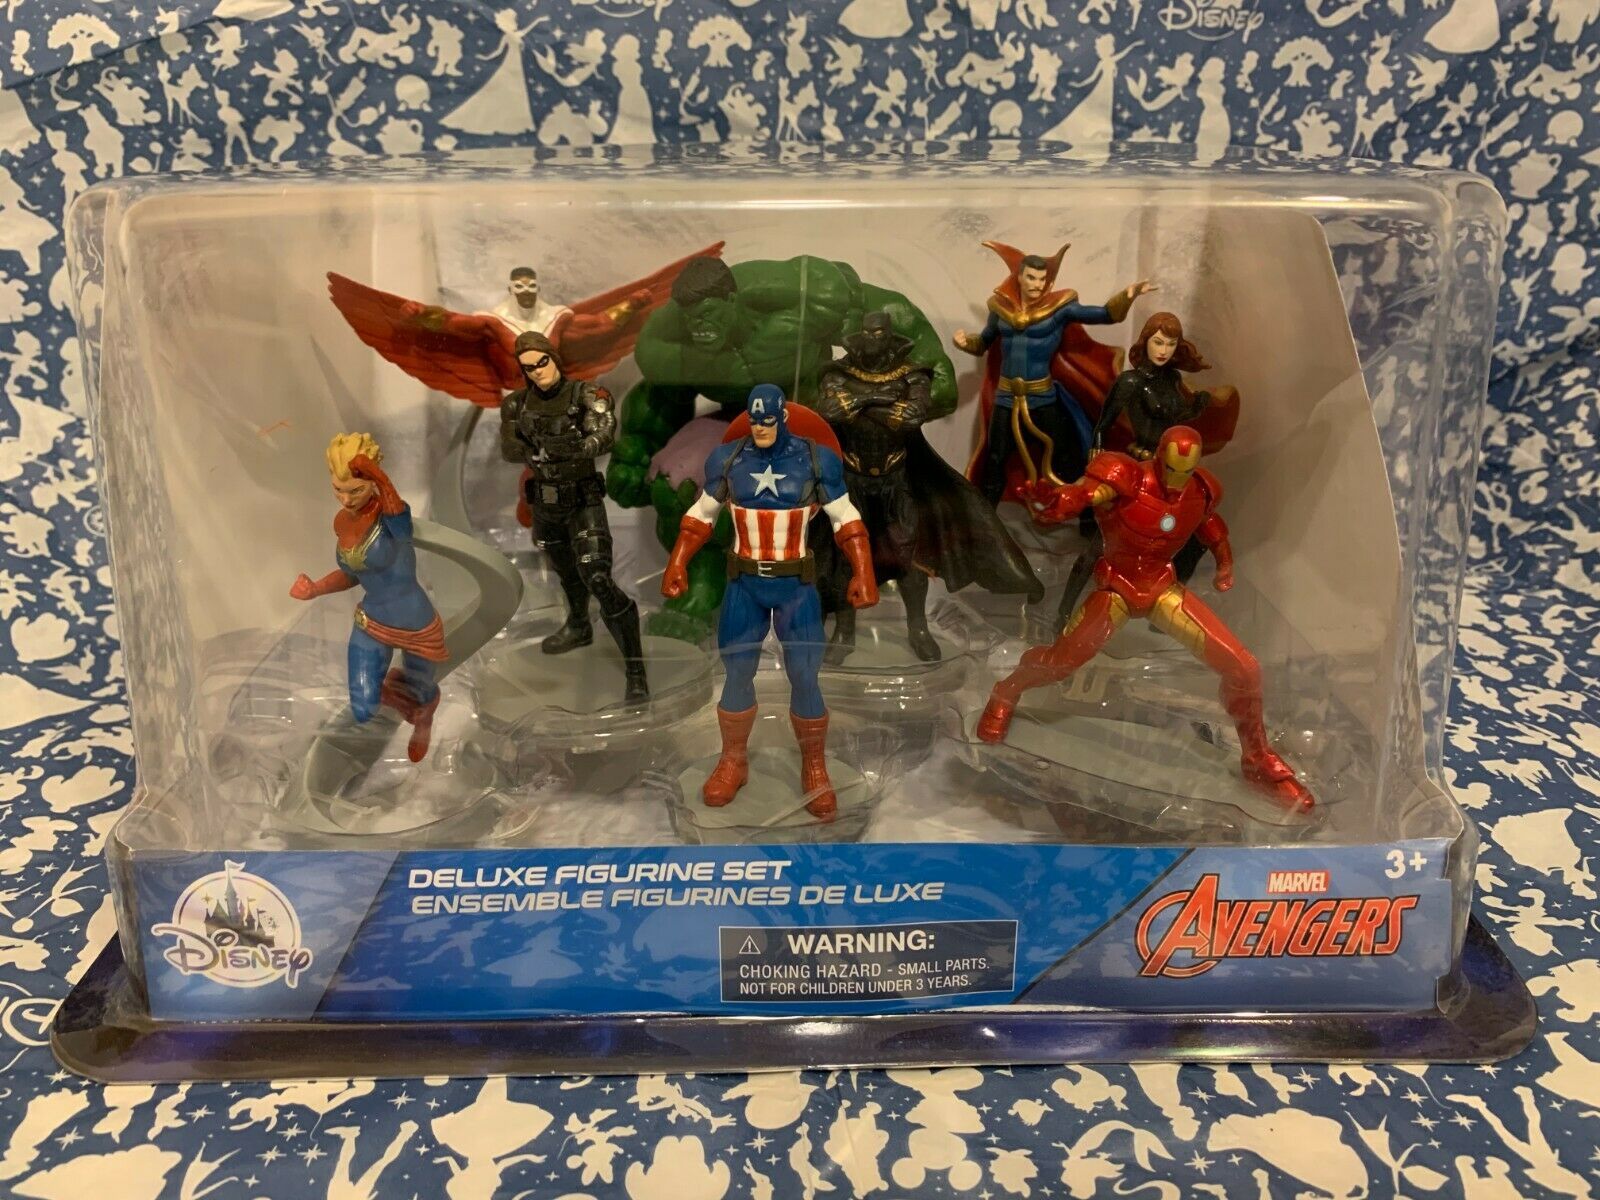 New Disney  Avengers Deluxe Figurine Play Set Captain America Hulk Iron man falc - $67.03